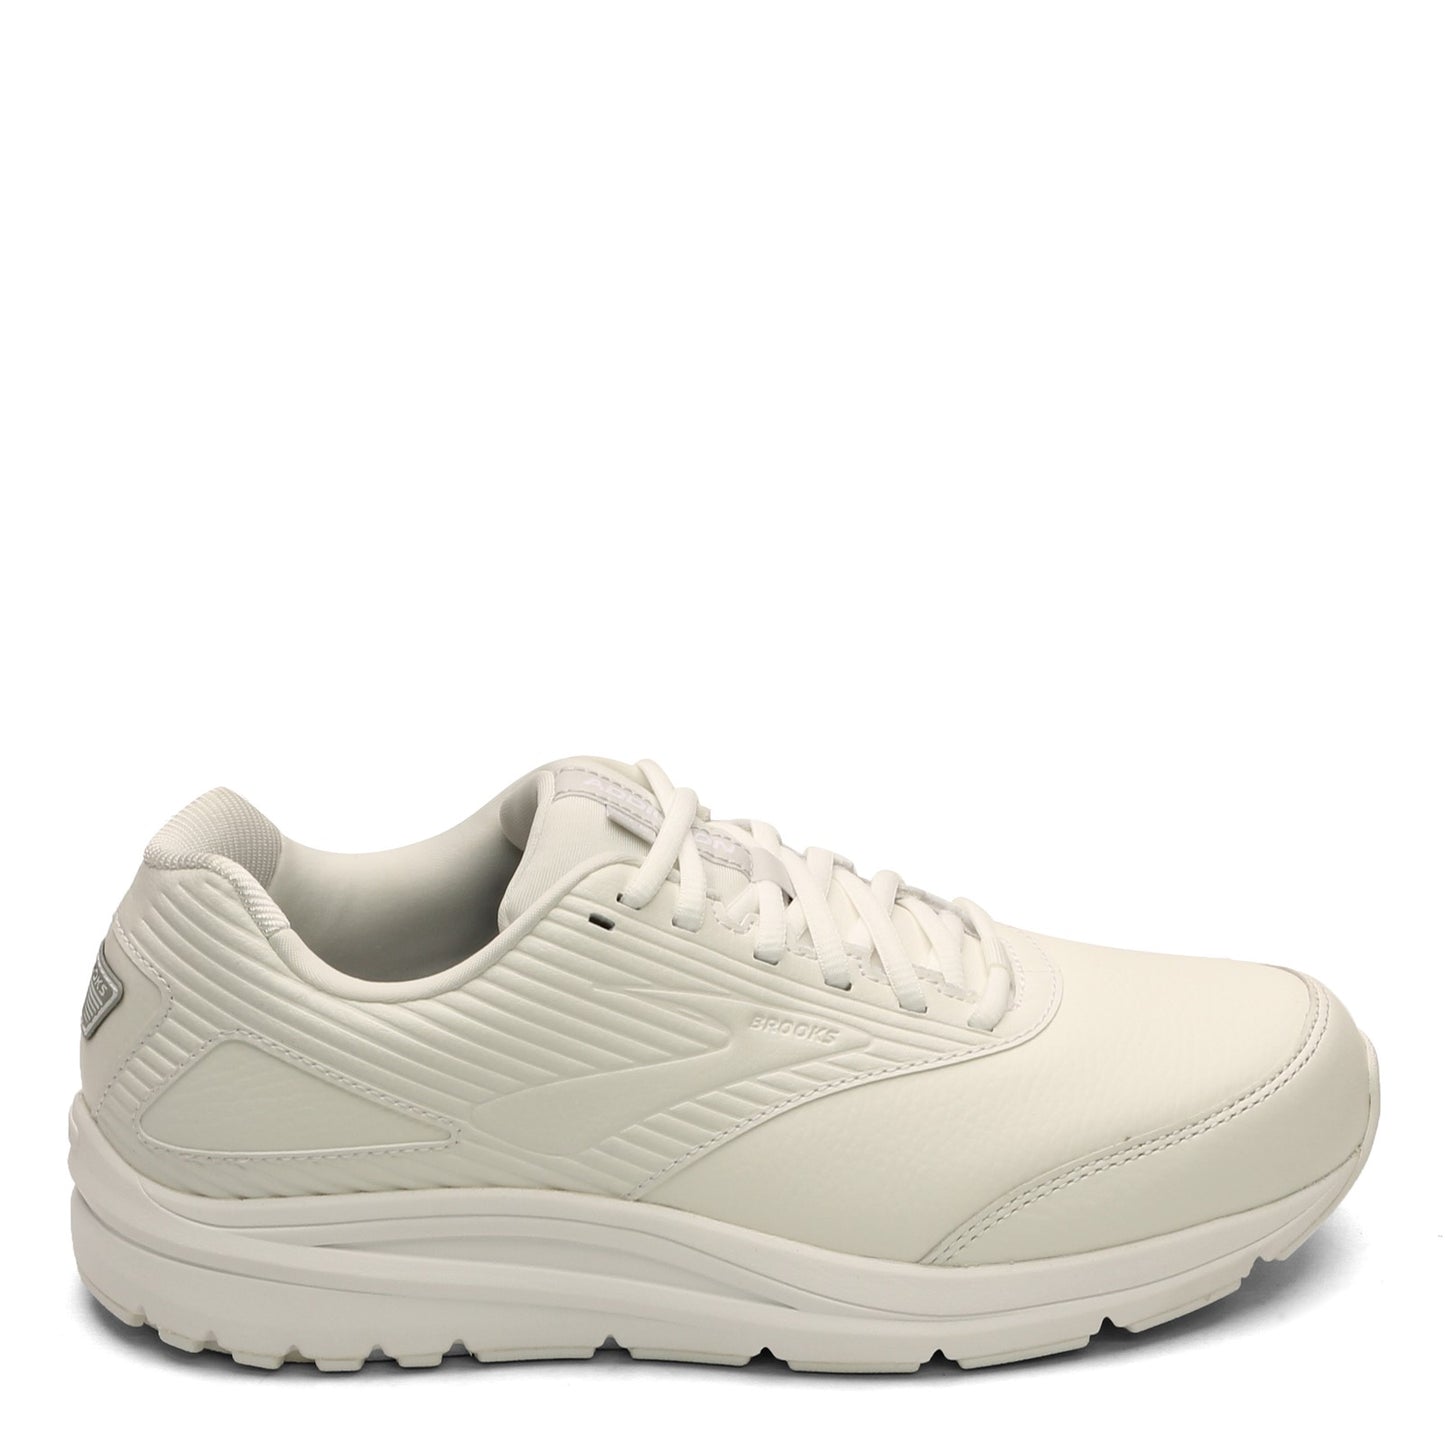 Peltz Shoes  Men's Brooks Addiction Walker 2 Walking Shoe White/White 110318 1D 142